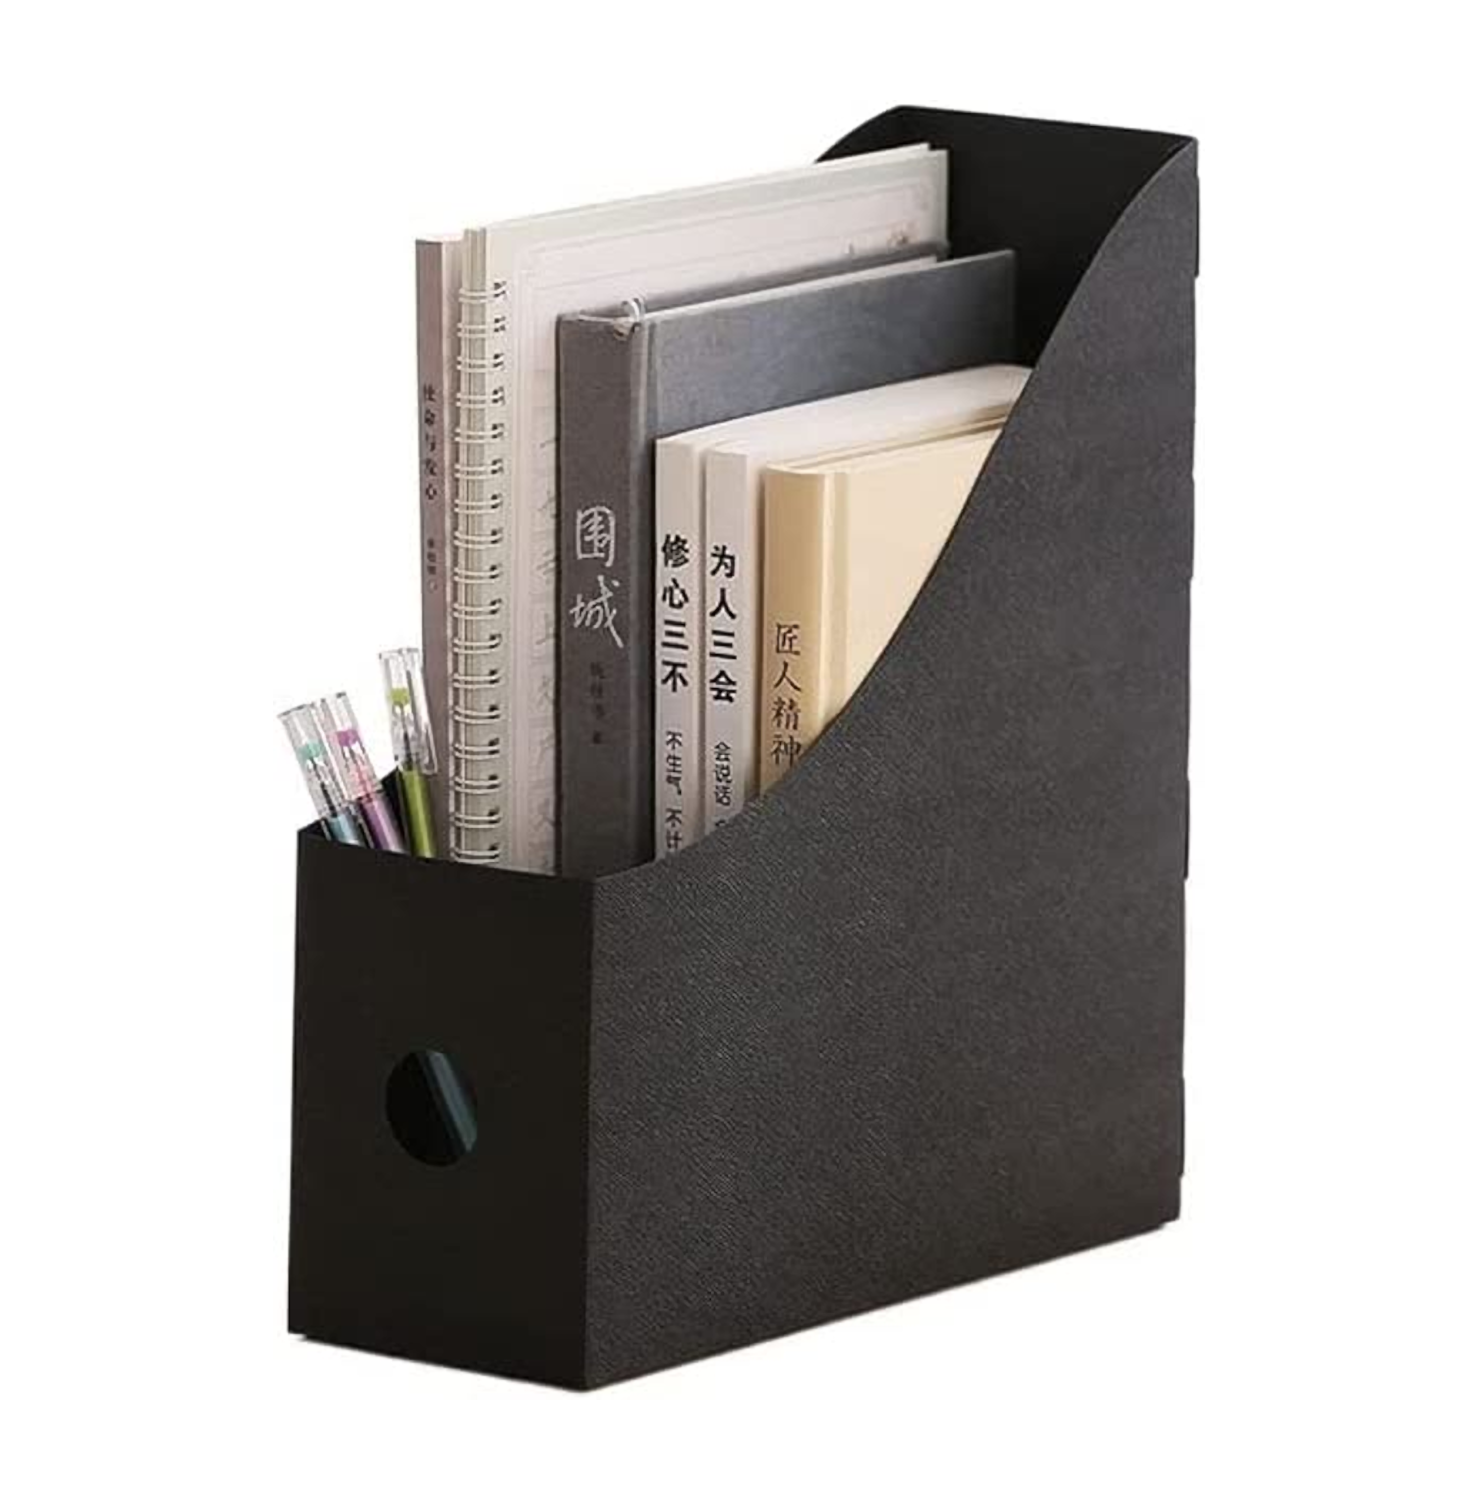 File Storage Box - Foldable File Box Student Desk Accessories Home Office Storage Thick Plastic Cont